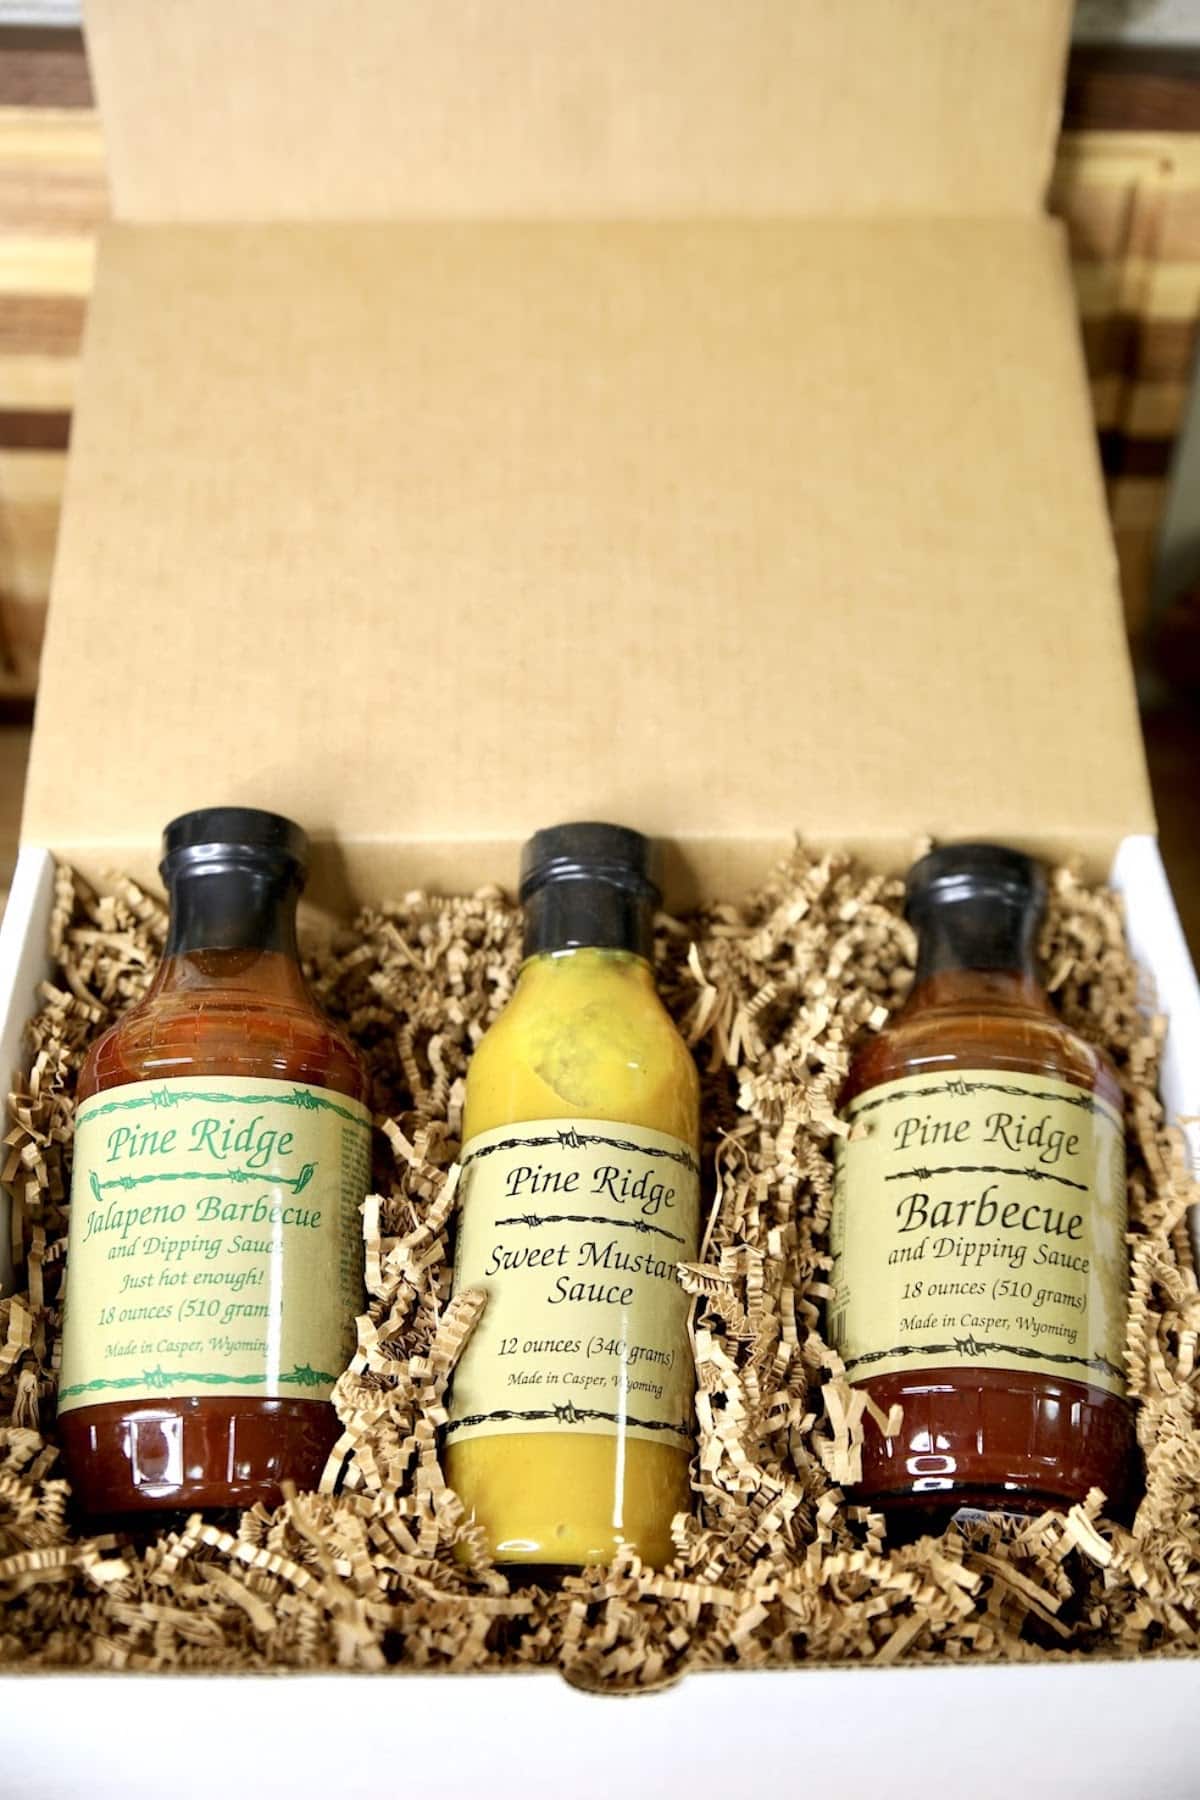 Pine Ridge Sauces gift box.